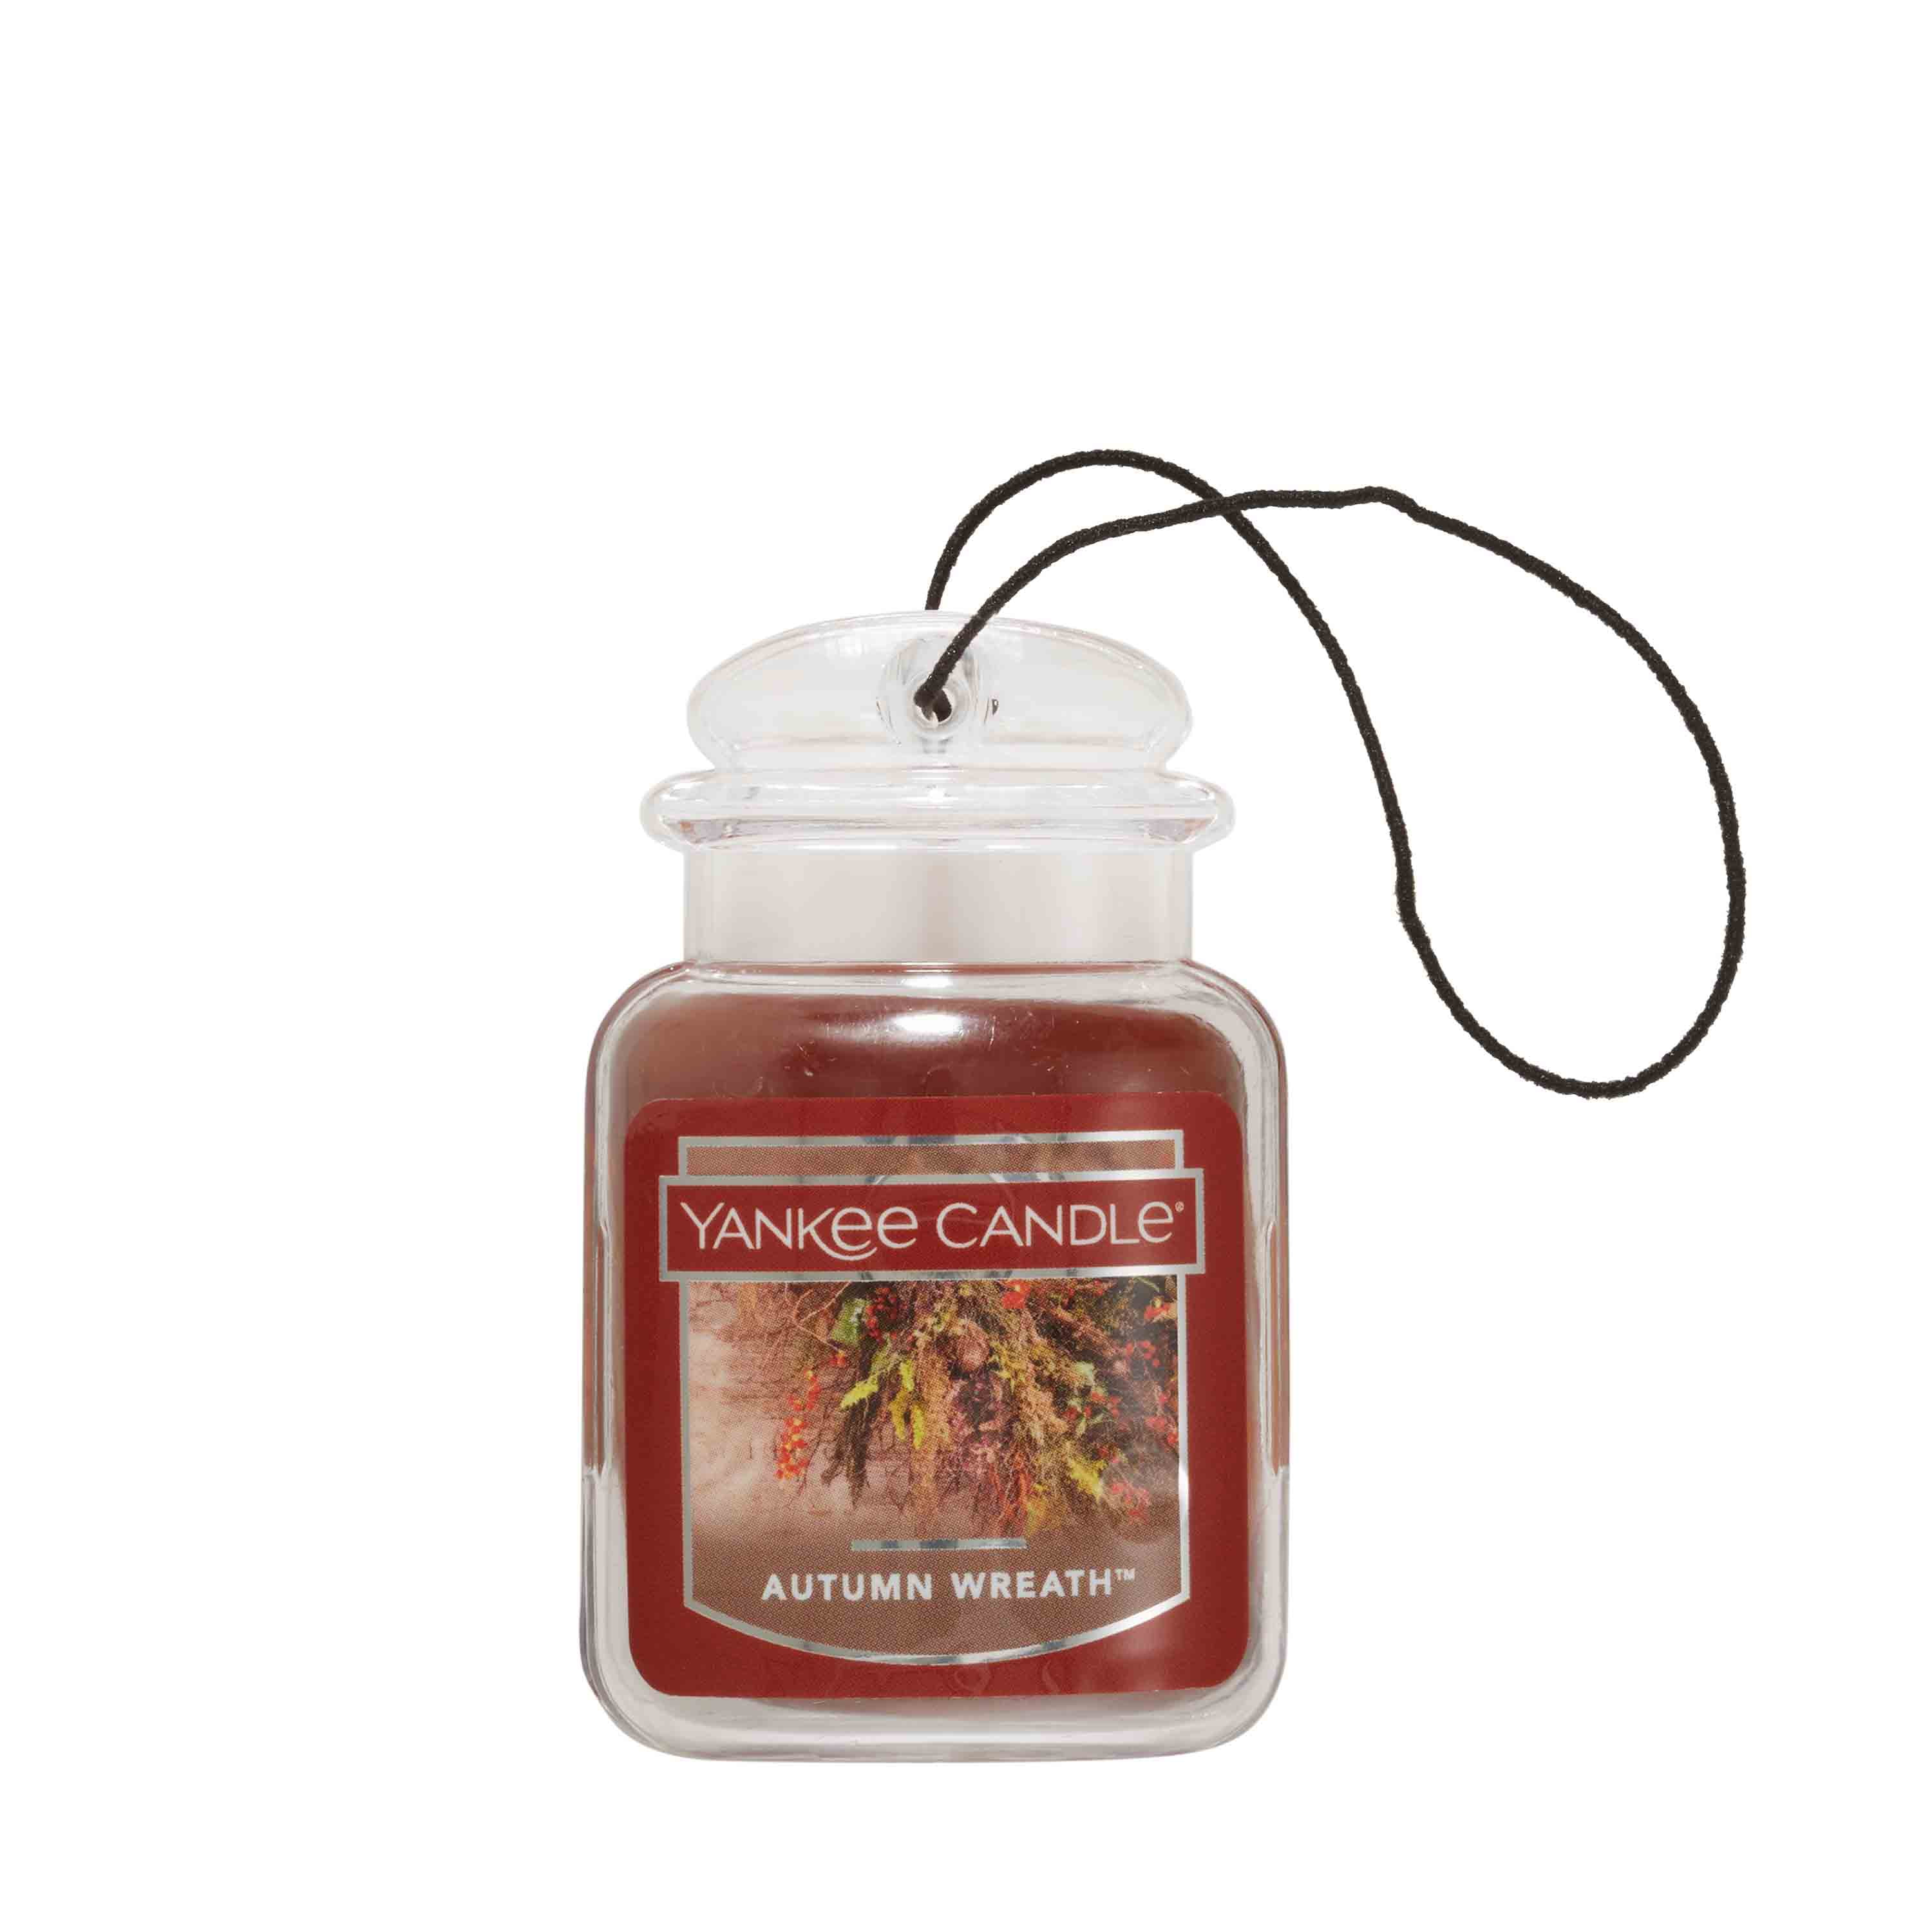 Yankee Candle Car Jar Ultimate Hanging Air Freshener - Spiced Pumpkin 